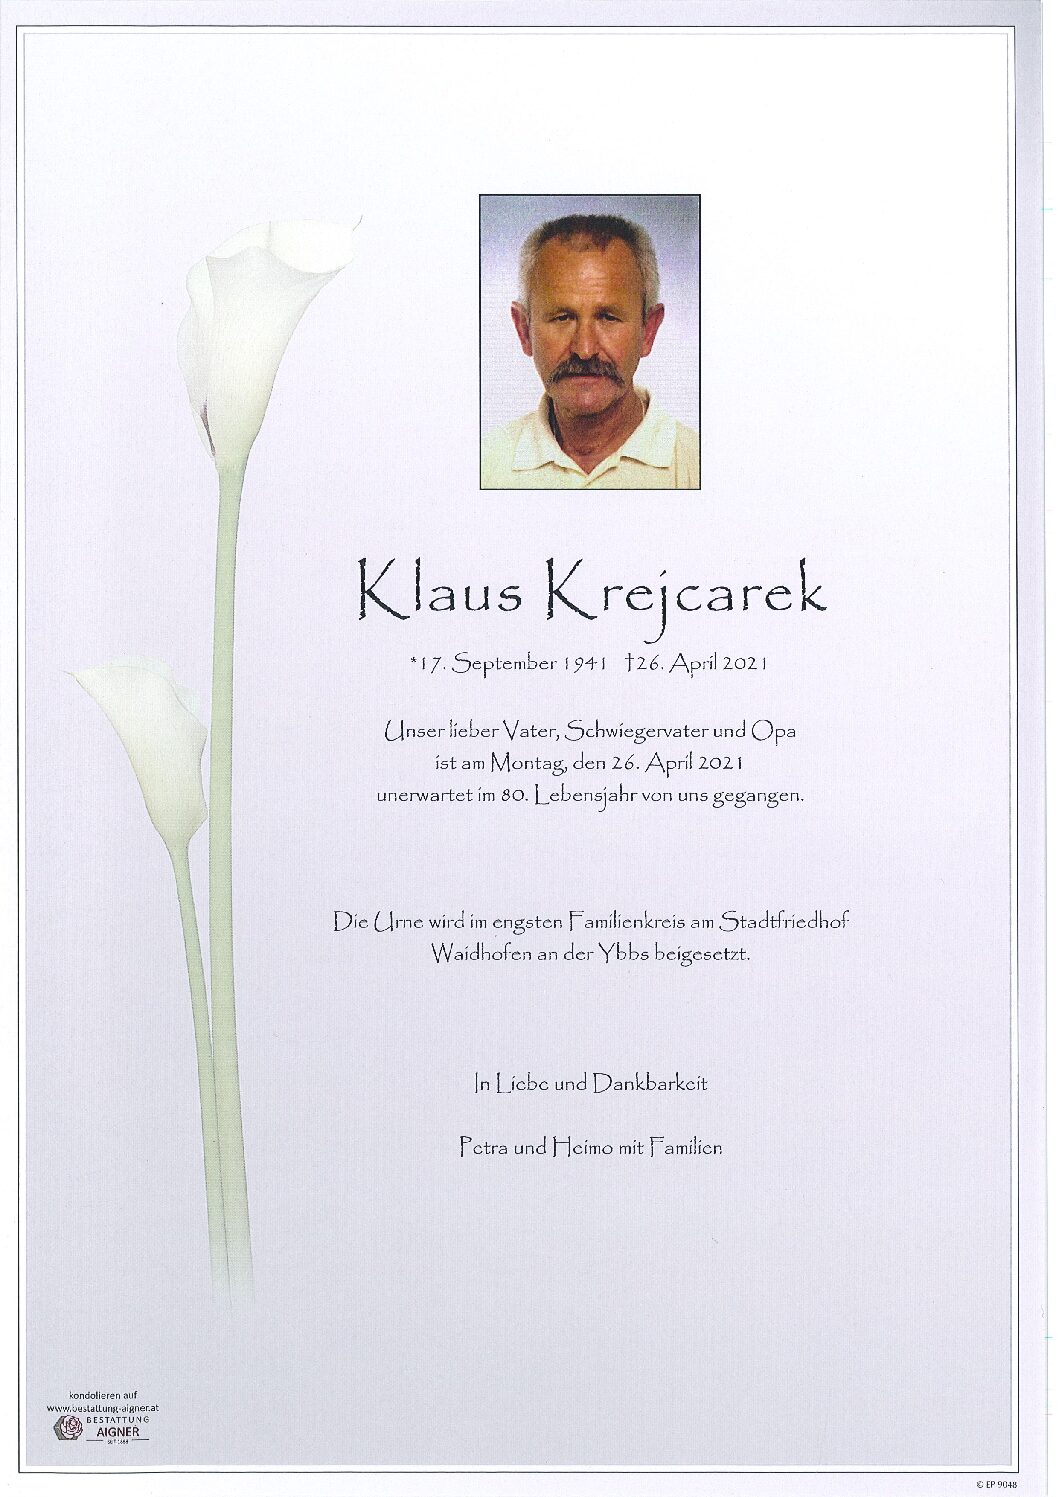 Klaus Krejcarek